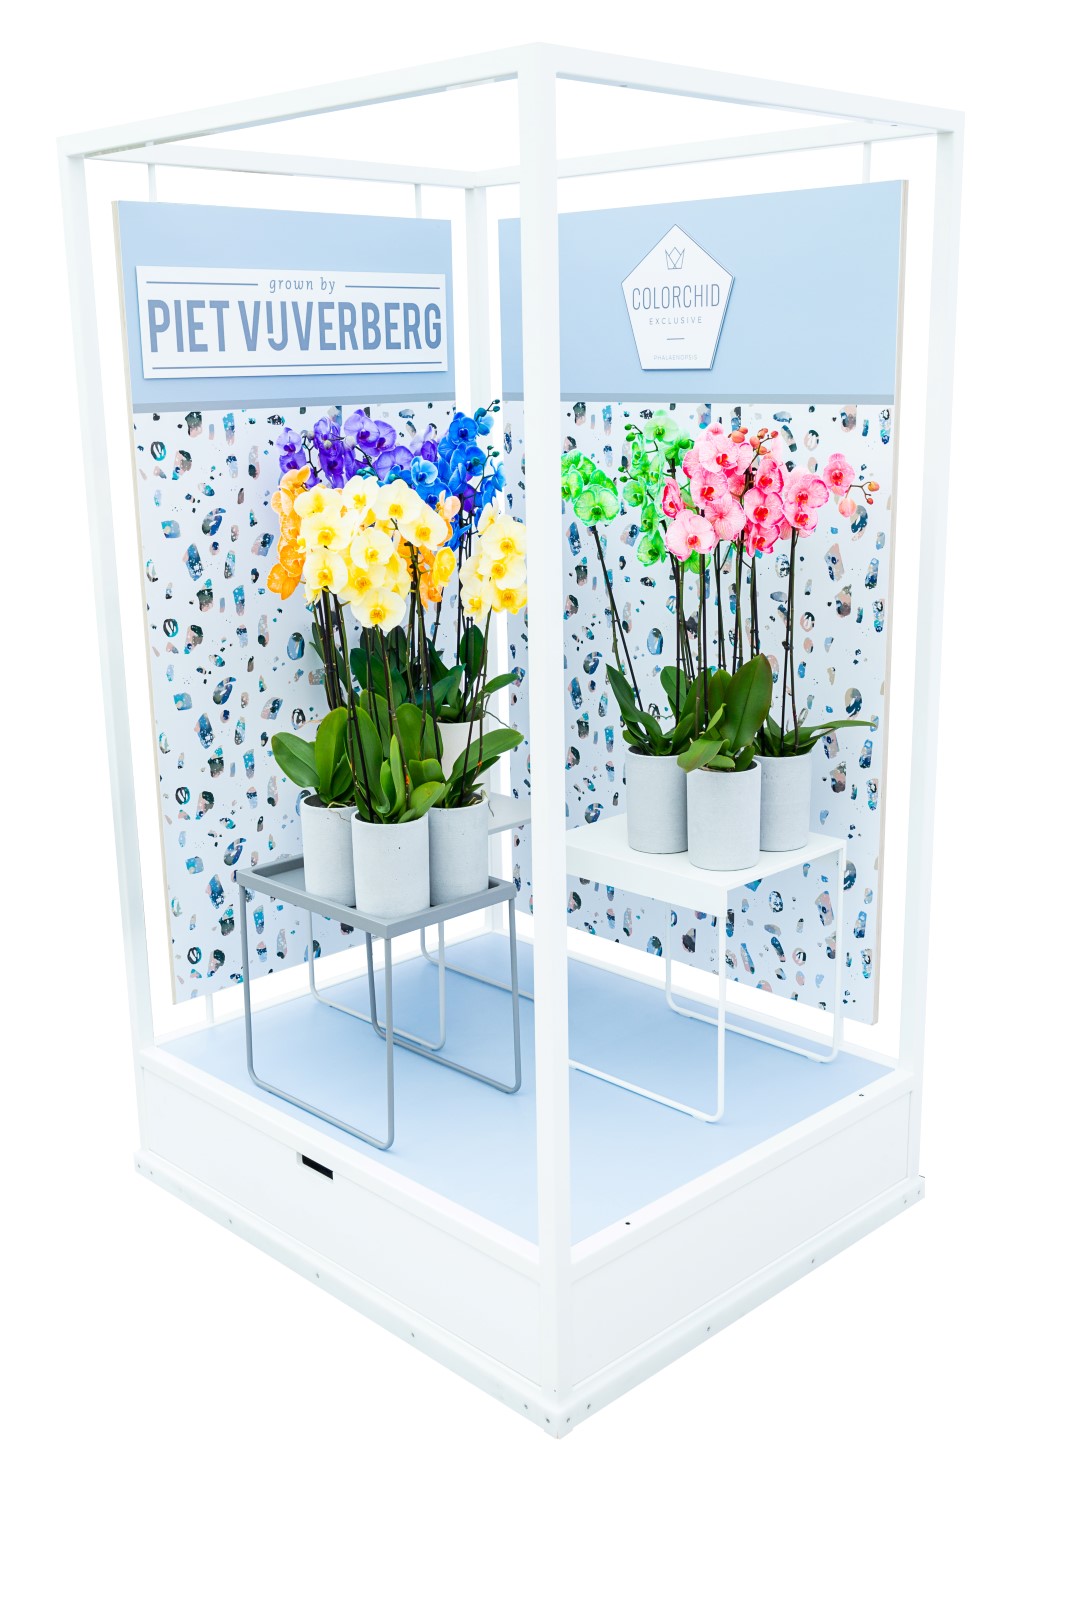 Piet Vijverberg Colorchid Go&Show